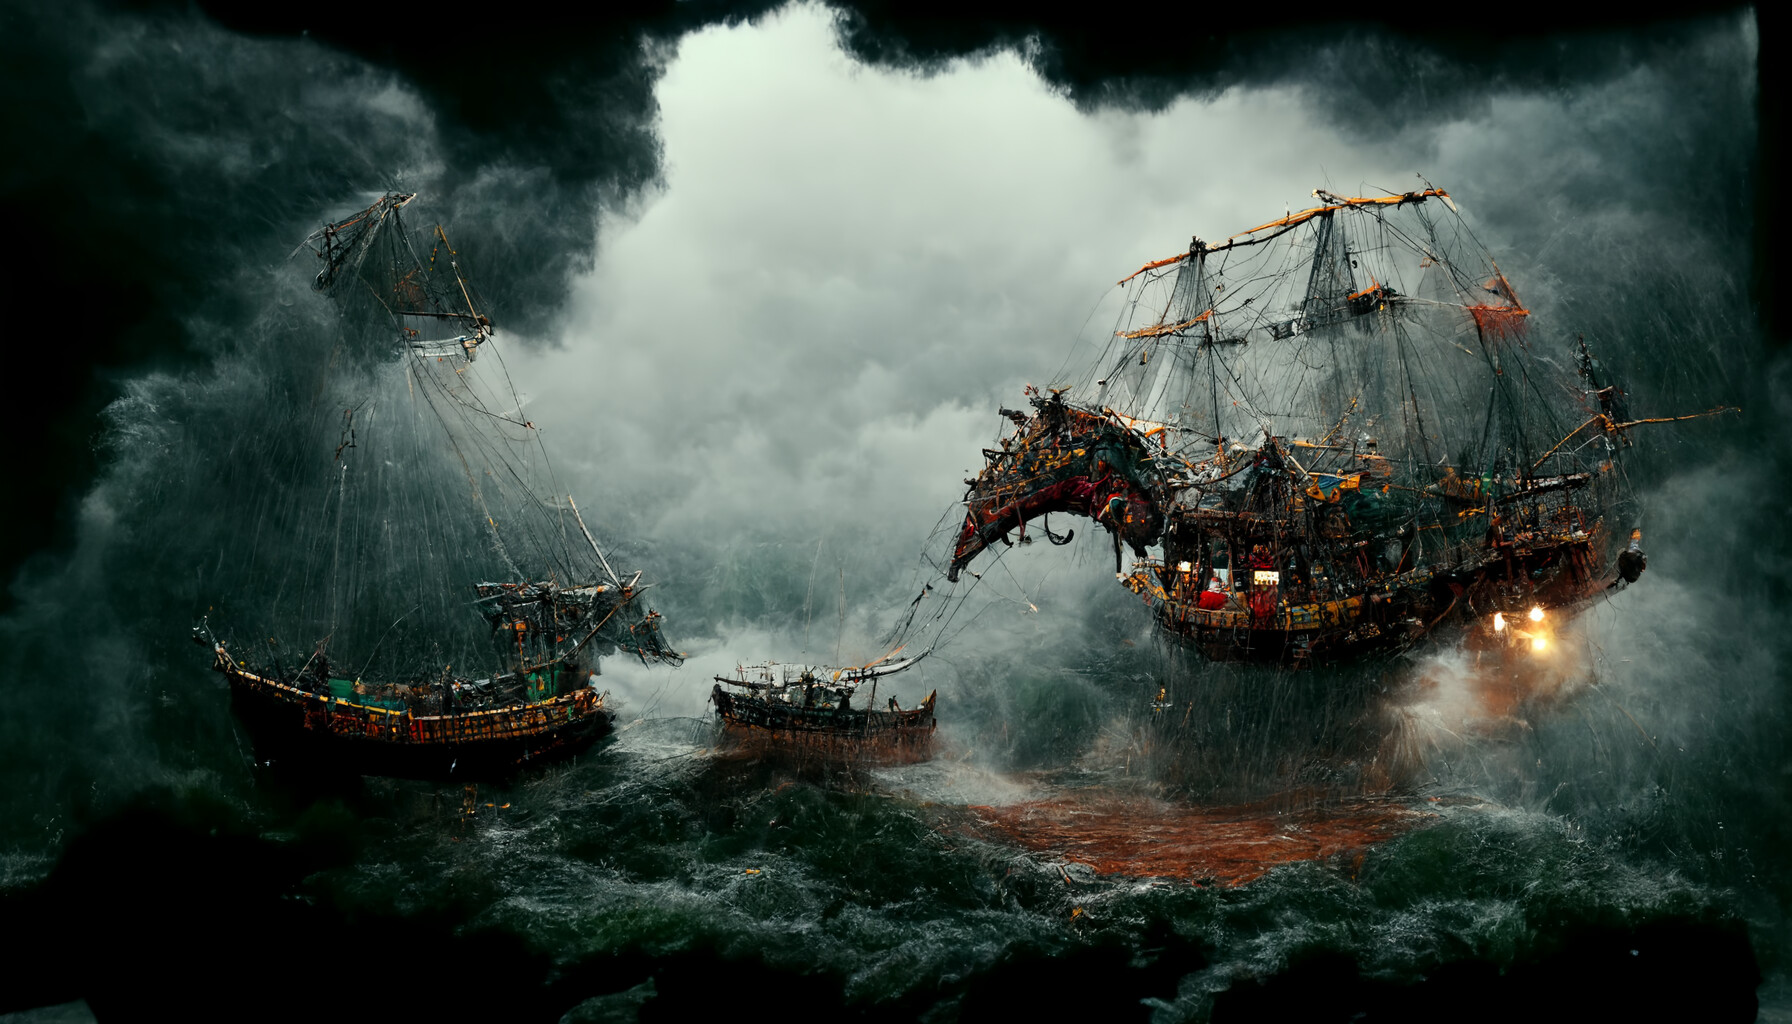 ArtStation - Pirate ship under dragon attack